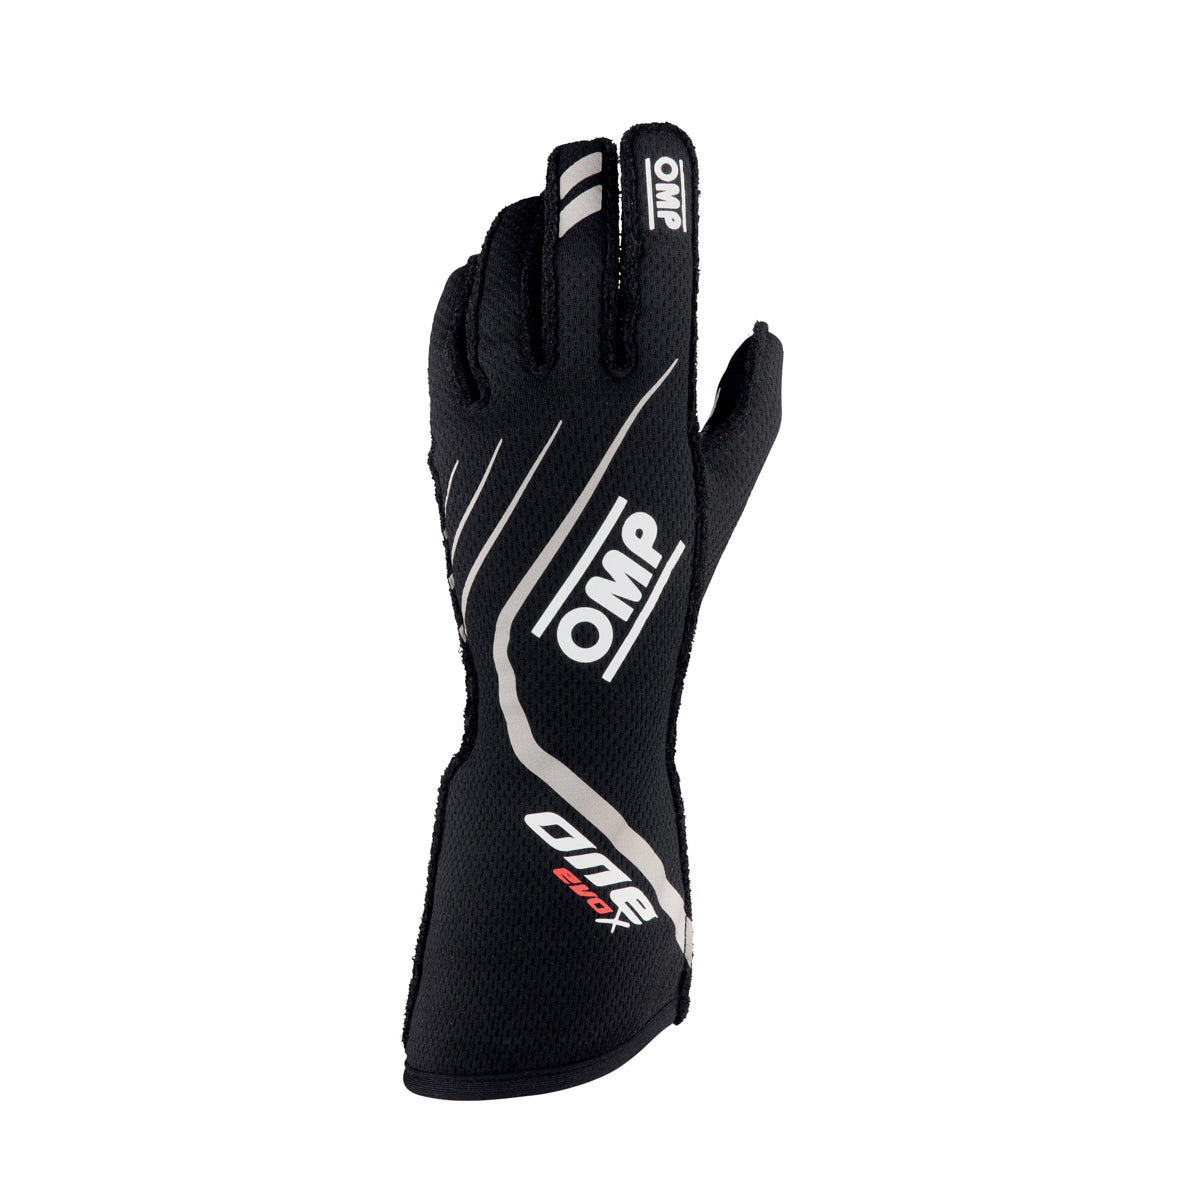 One EVO X Gloves Black Size Large